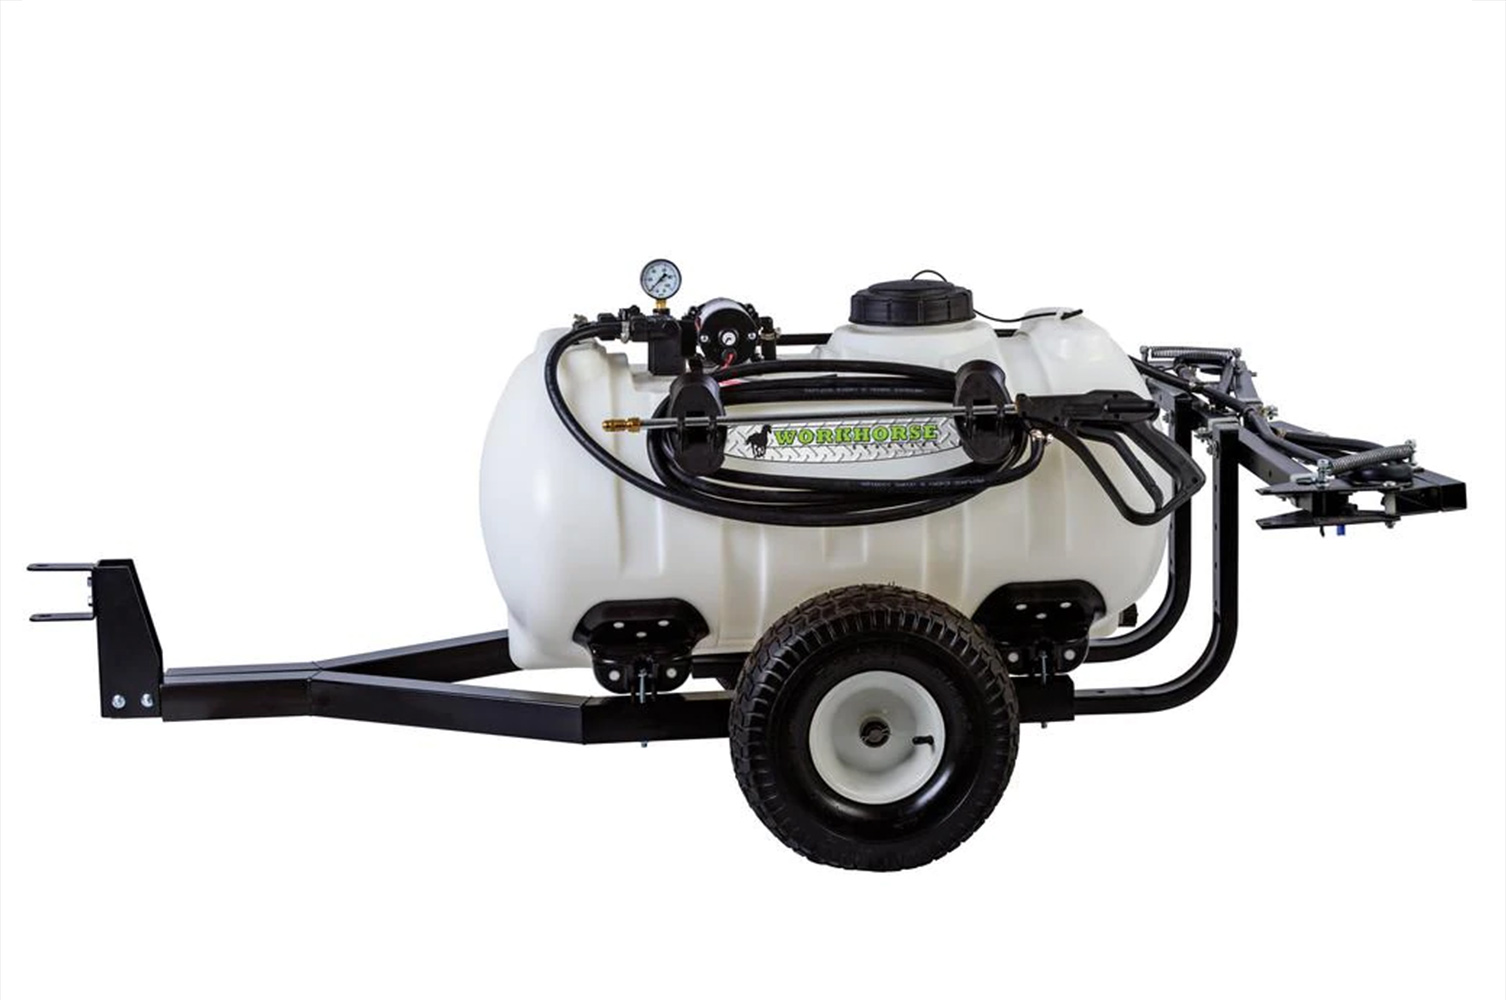 Workhorse Portable 5 Gallon Rechargeable Spot & Garden Sprayer, LG05SSG2, WorkHorse